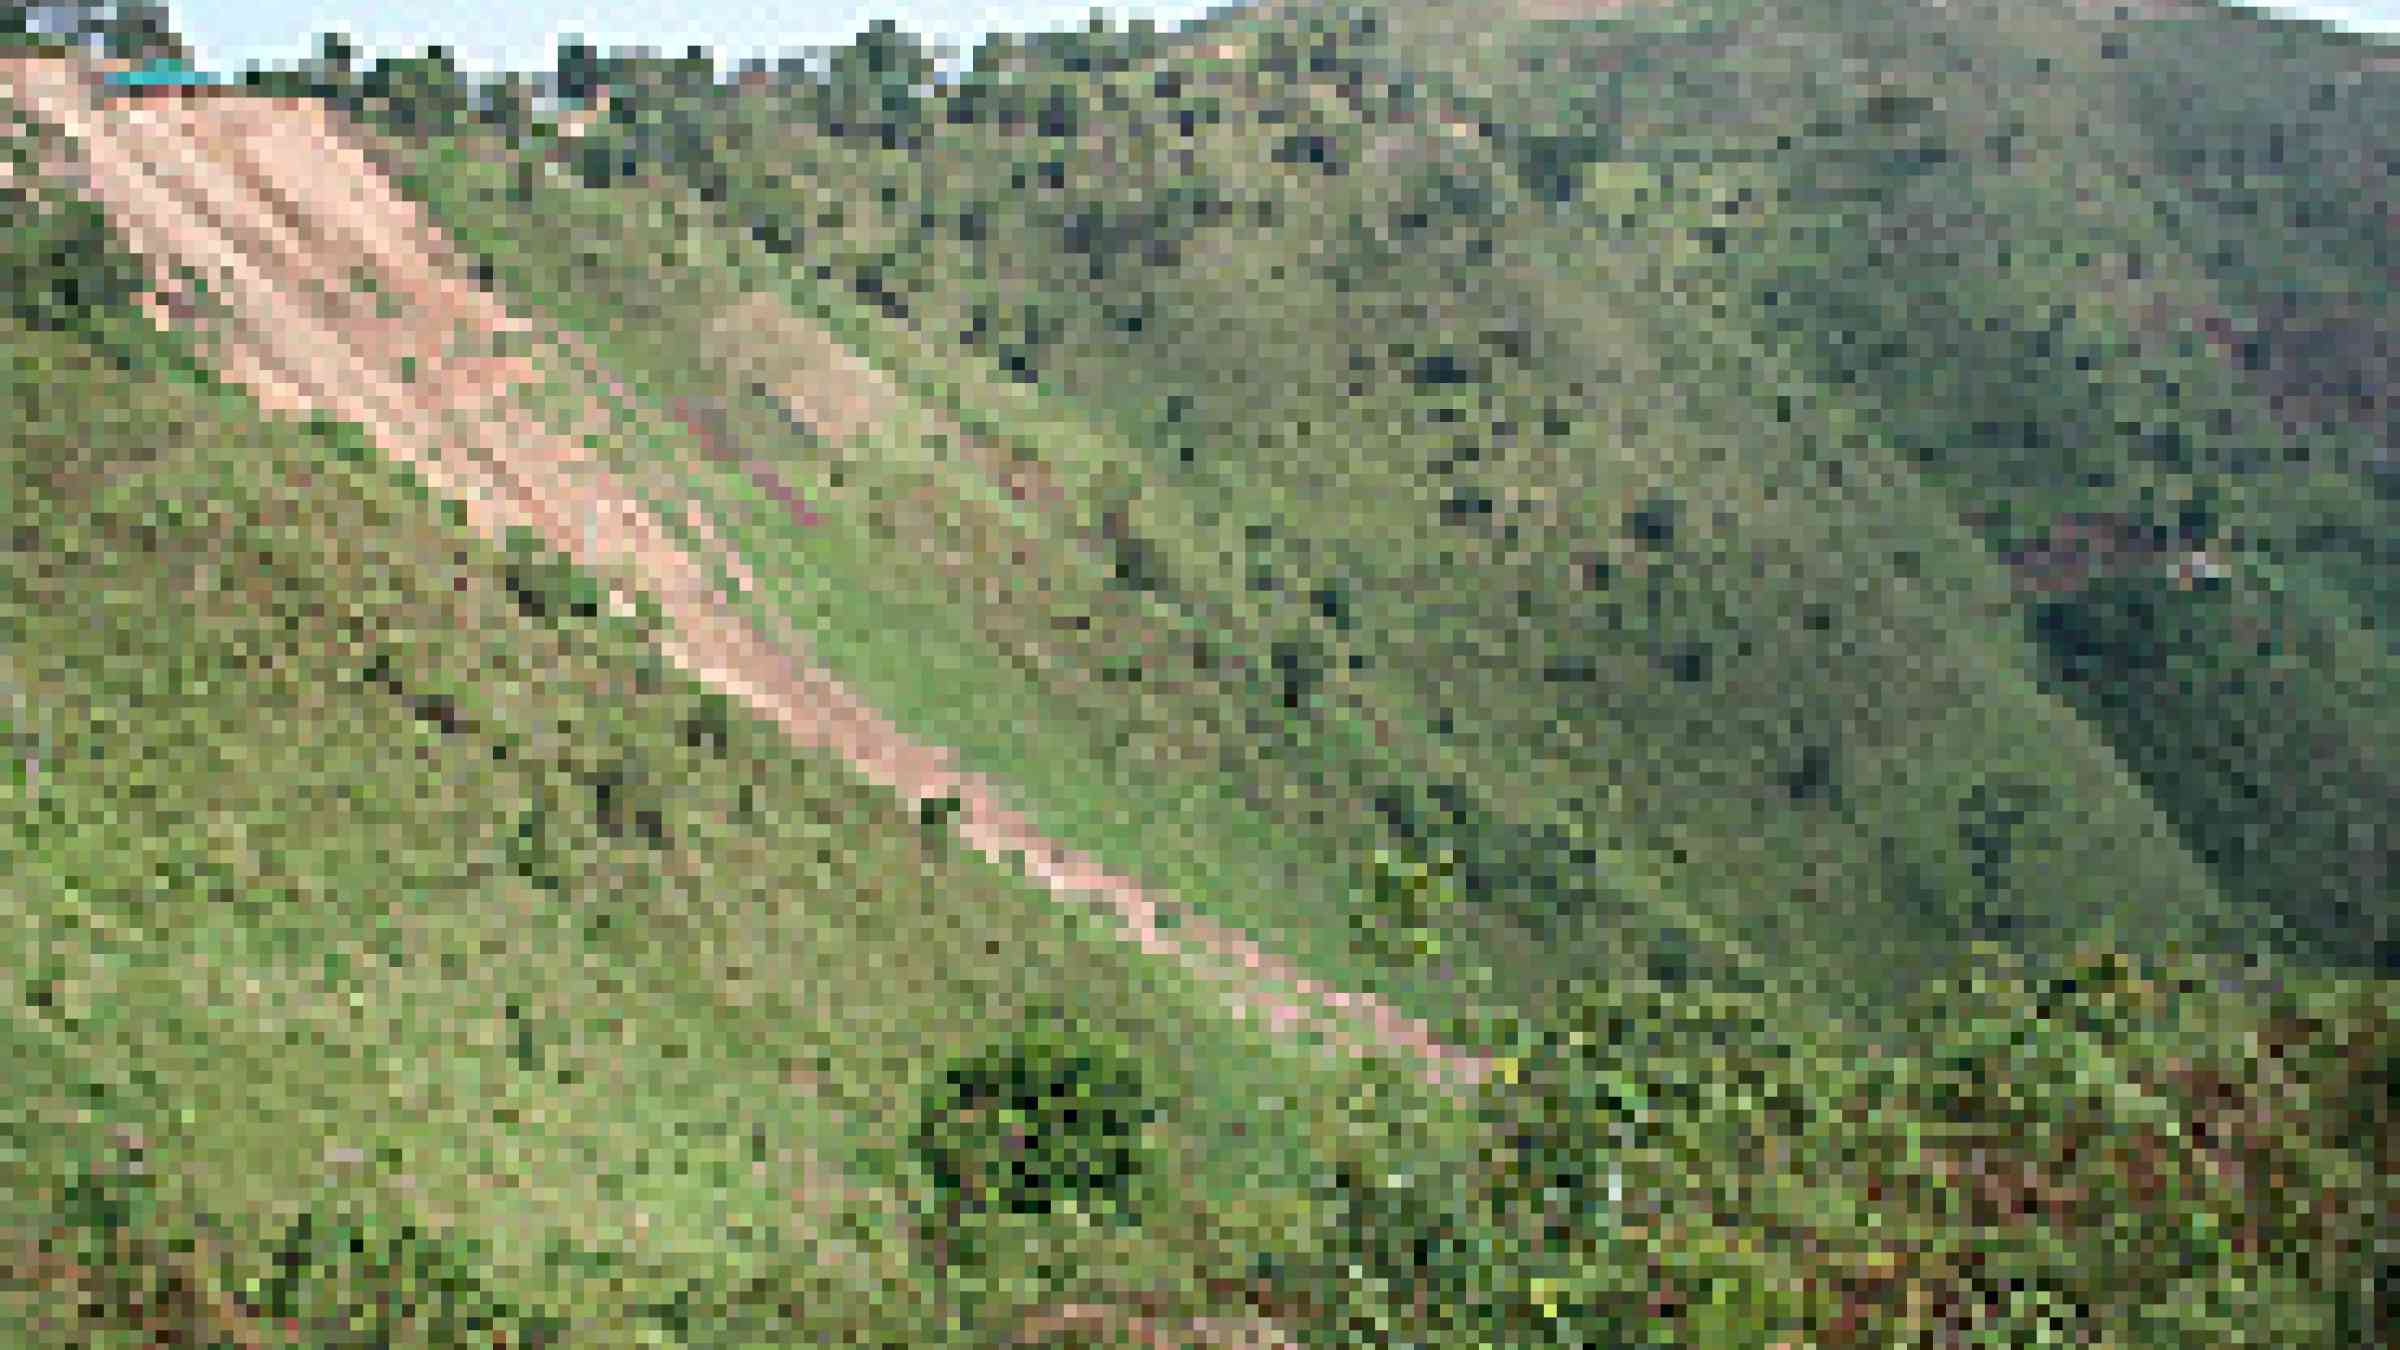 Photo of a landslide in Uganda by Flickr user, Kaj17, Creative Commons Attribution-Noncommercial-No Derivative Works 2.0 http://www.flickr.com/photos/kajisagook/3914734458/